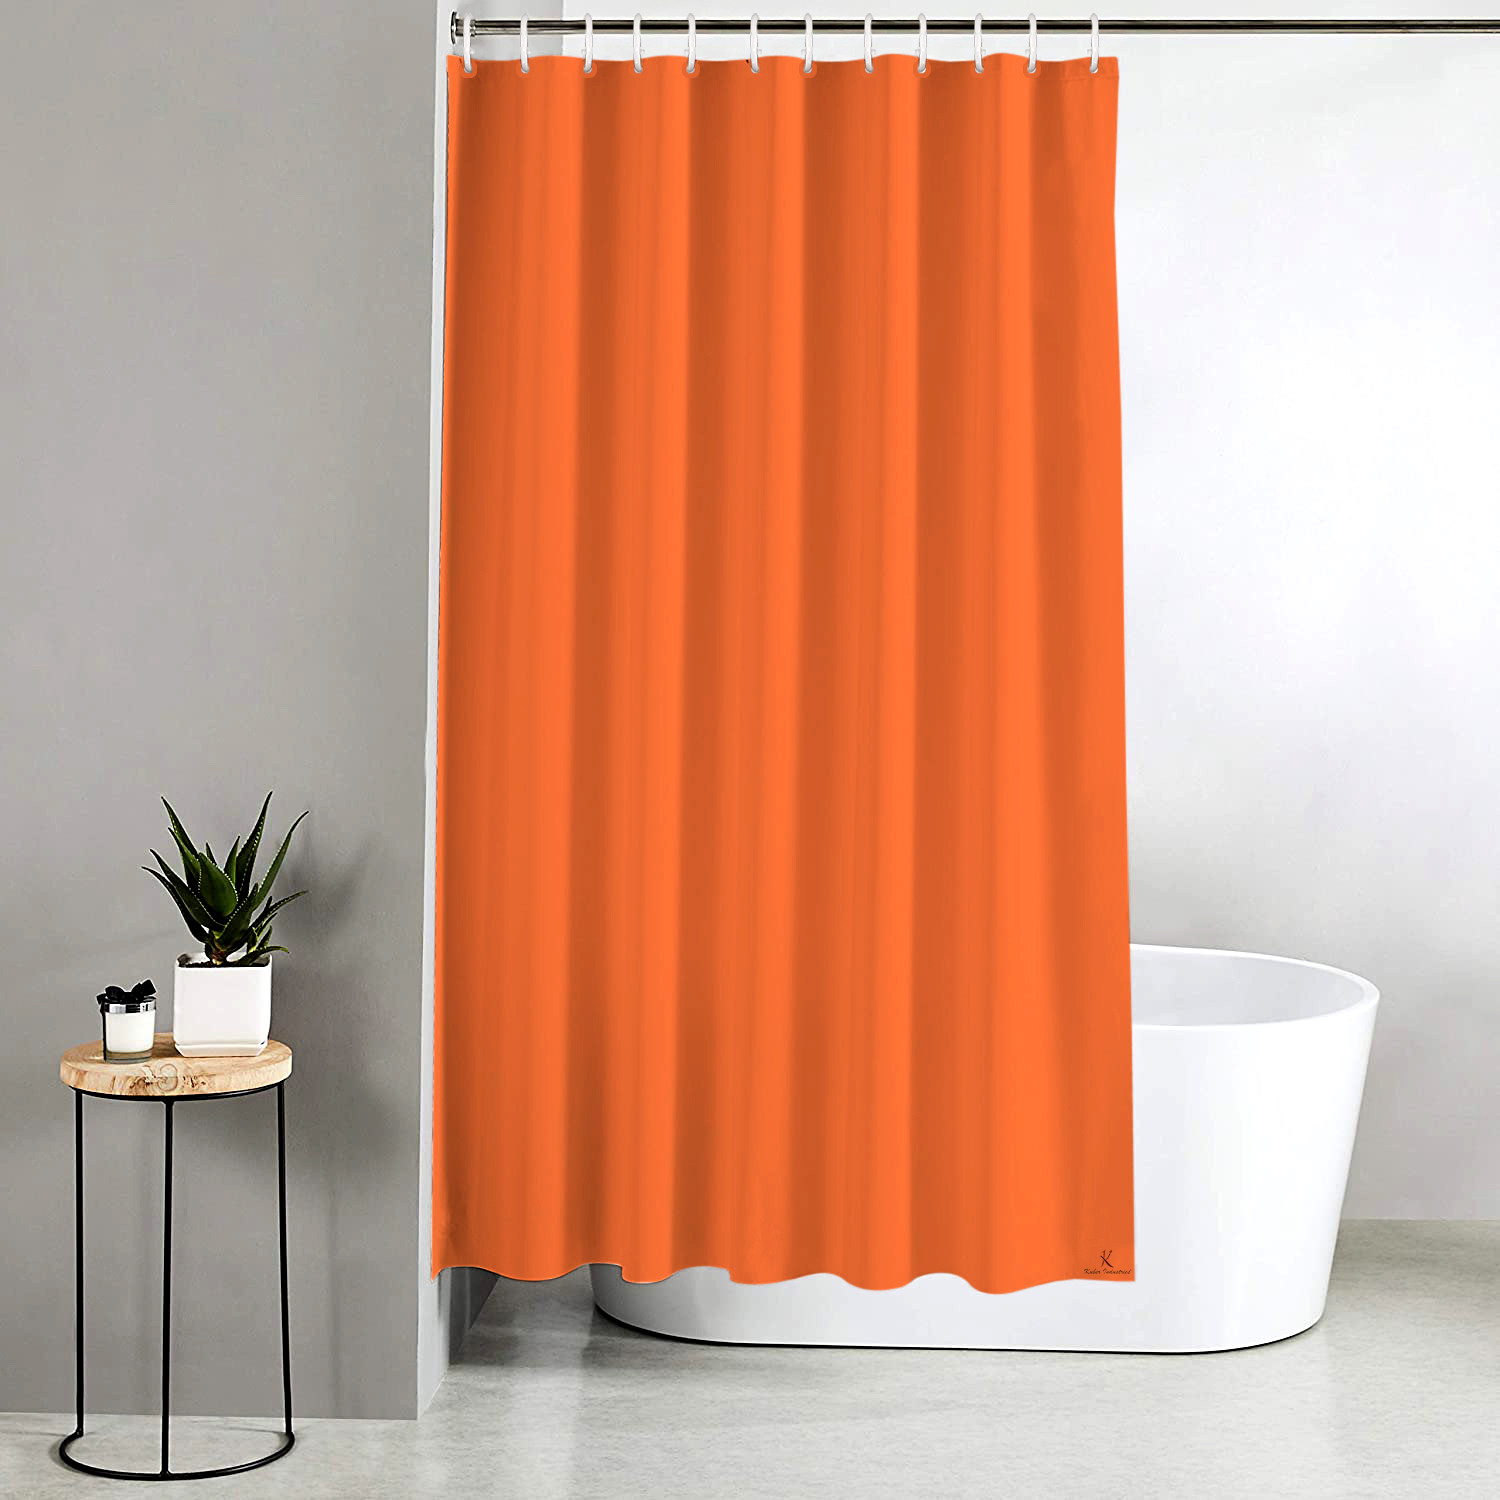 Kuber Industries PEVA Shower Curtain Liner , Heavy Duty Plastic Shower Curtain With Hooks for Bathroom, Bathtub, 70